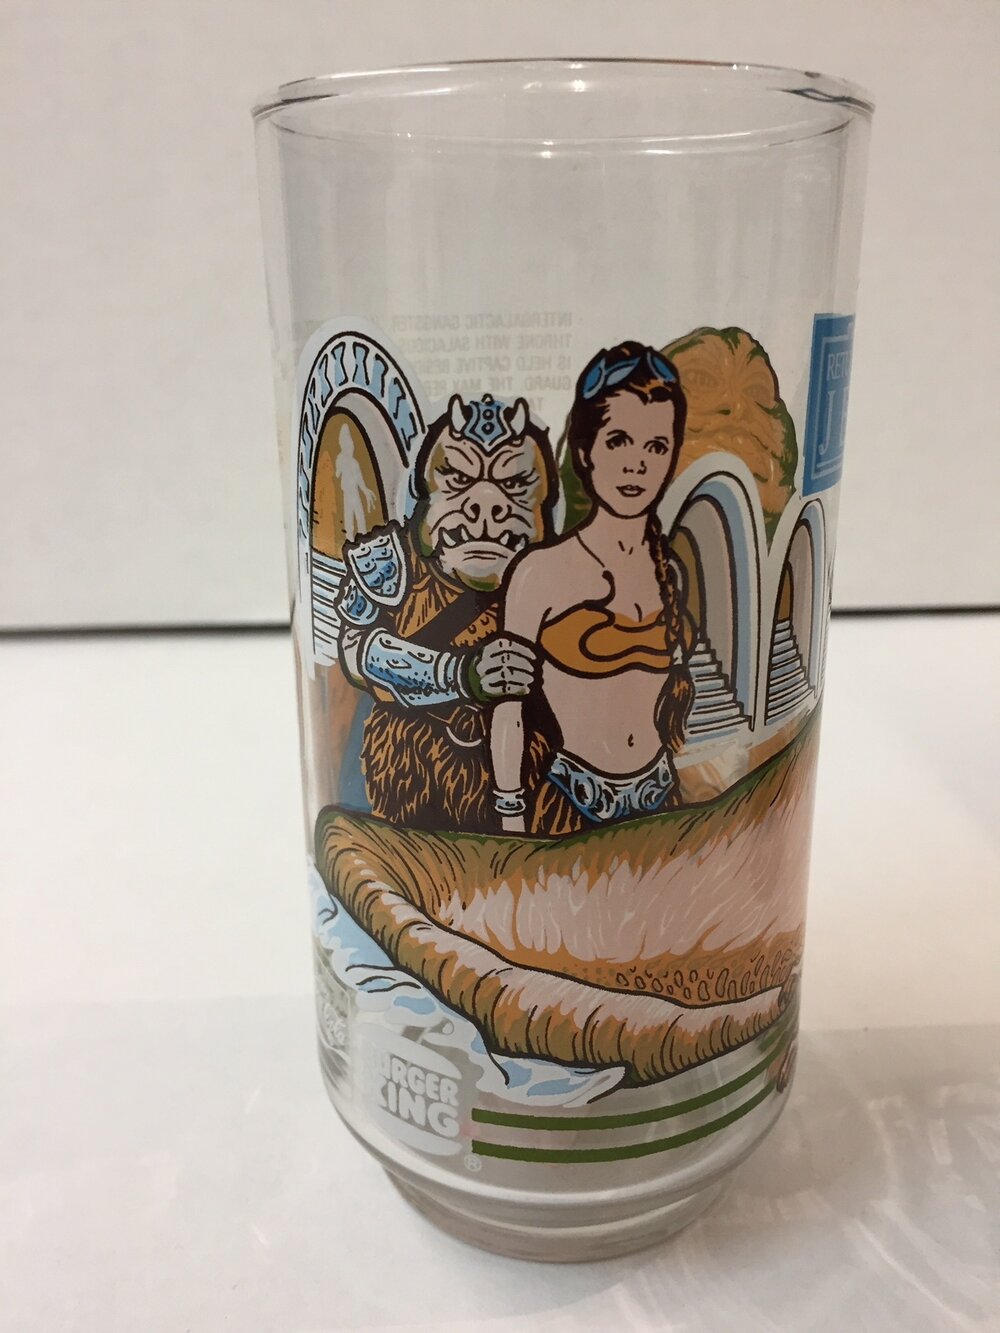 Star Wars Return of the Jedi Tumblers Drinking Glasses Burger King Promo  1983 